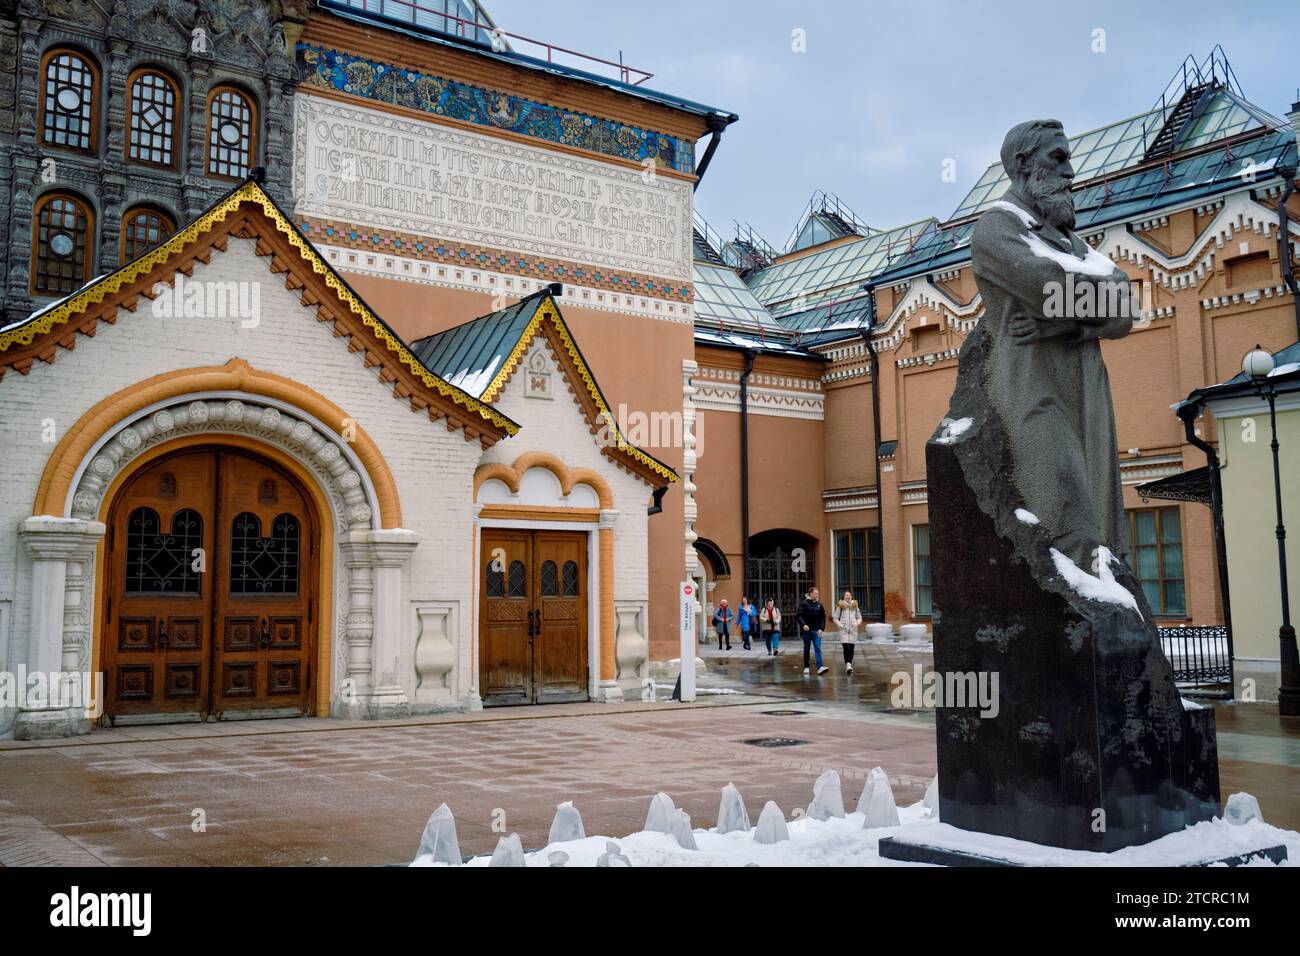 Le monument à Pavel Tretyakov devant la Galerie nationale Tretyakov. Moscou, Russie. Banque D'Images